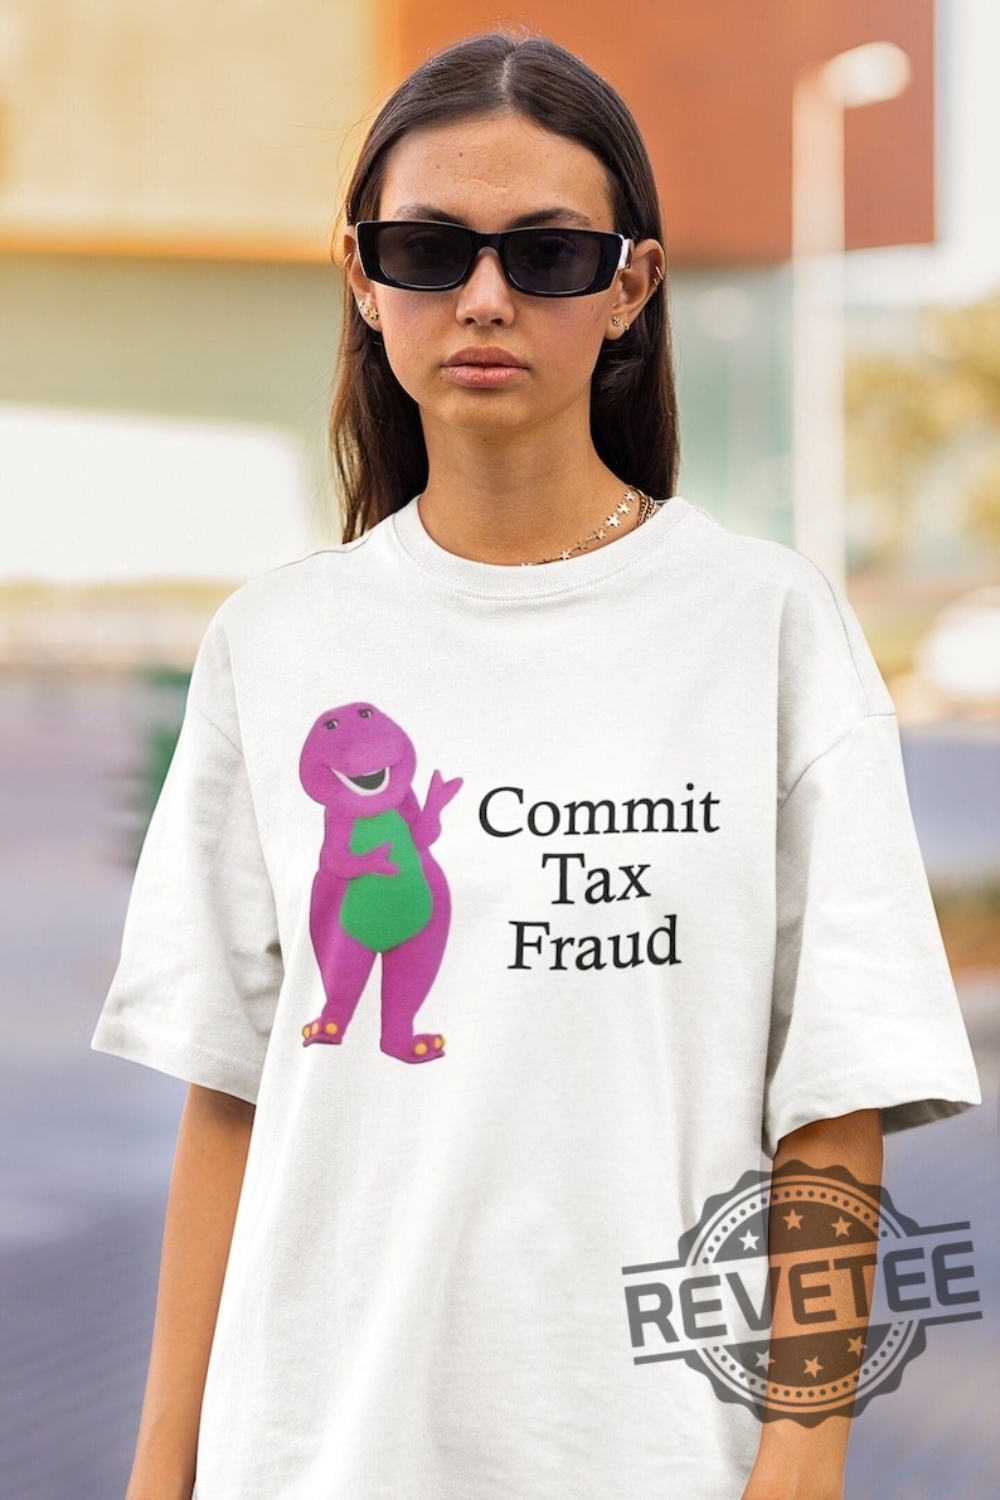 Commit Tax Fraud Shirt, Vintage Shirt for Men Women